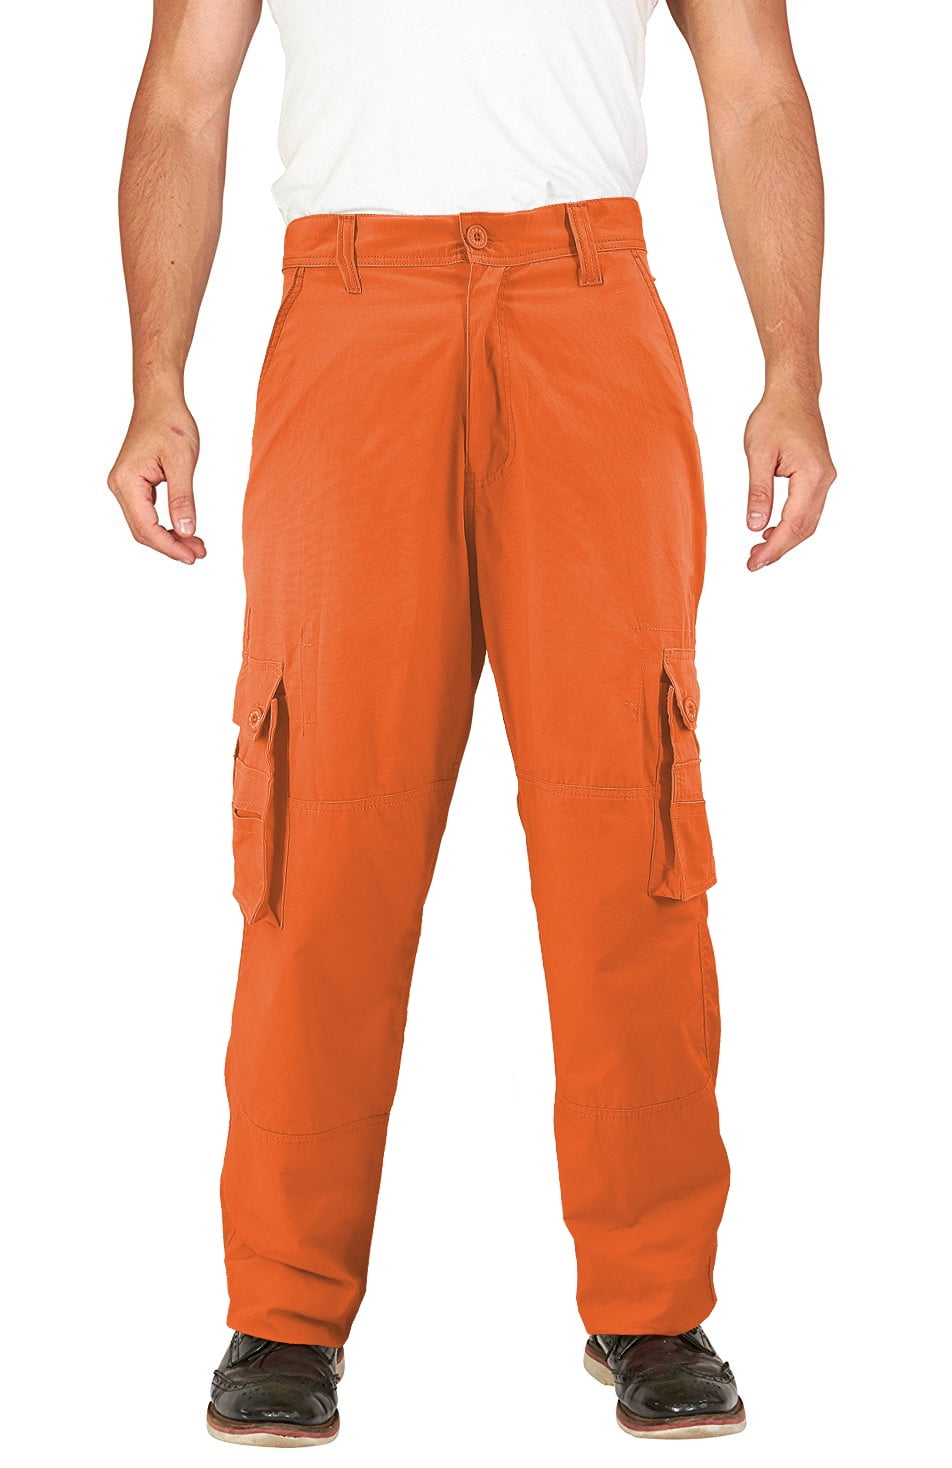 orange military pants